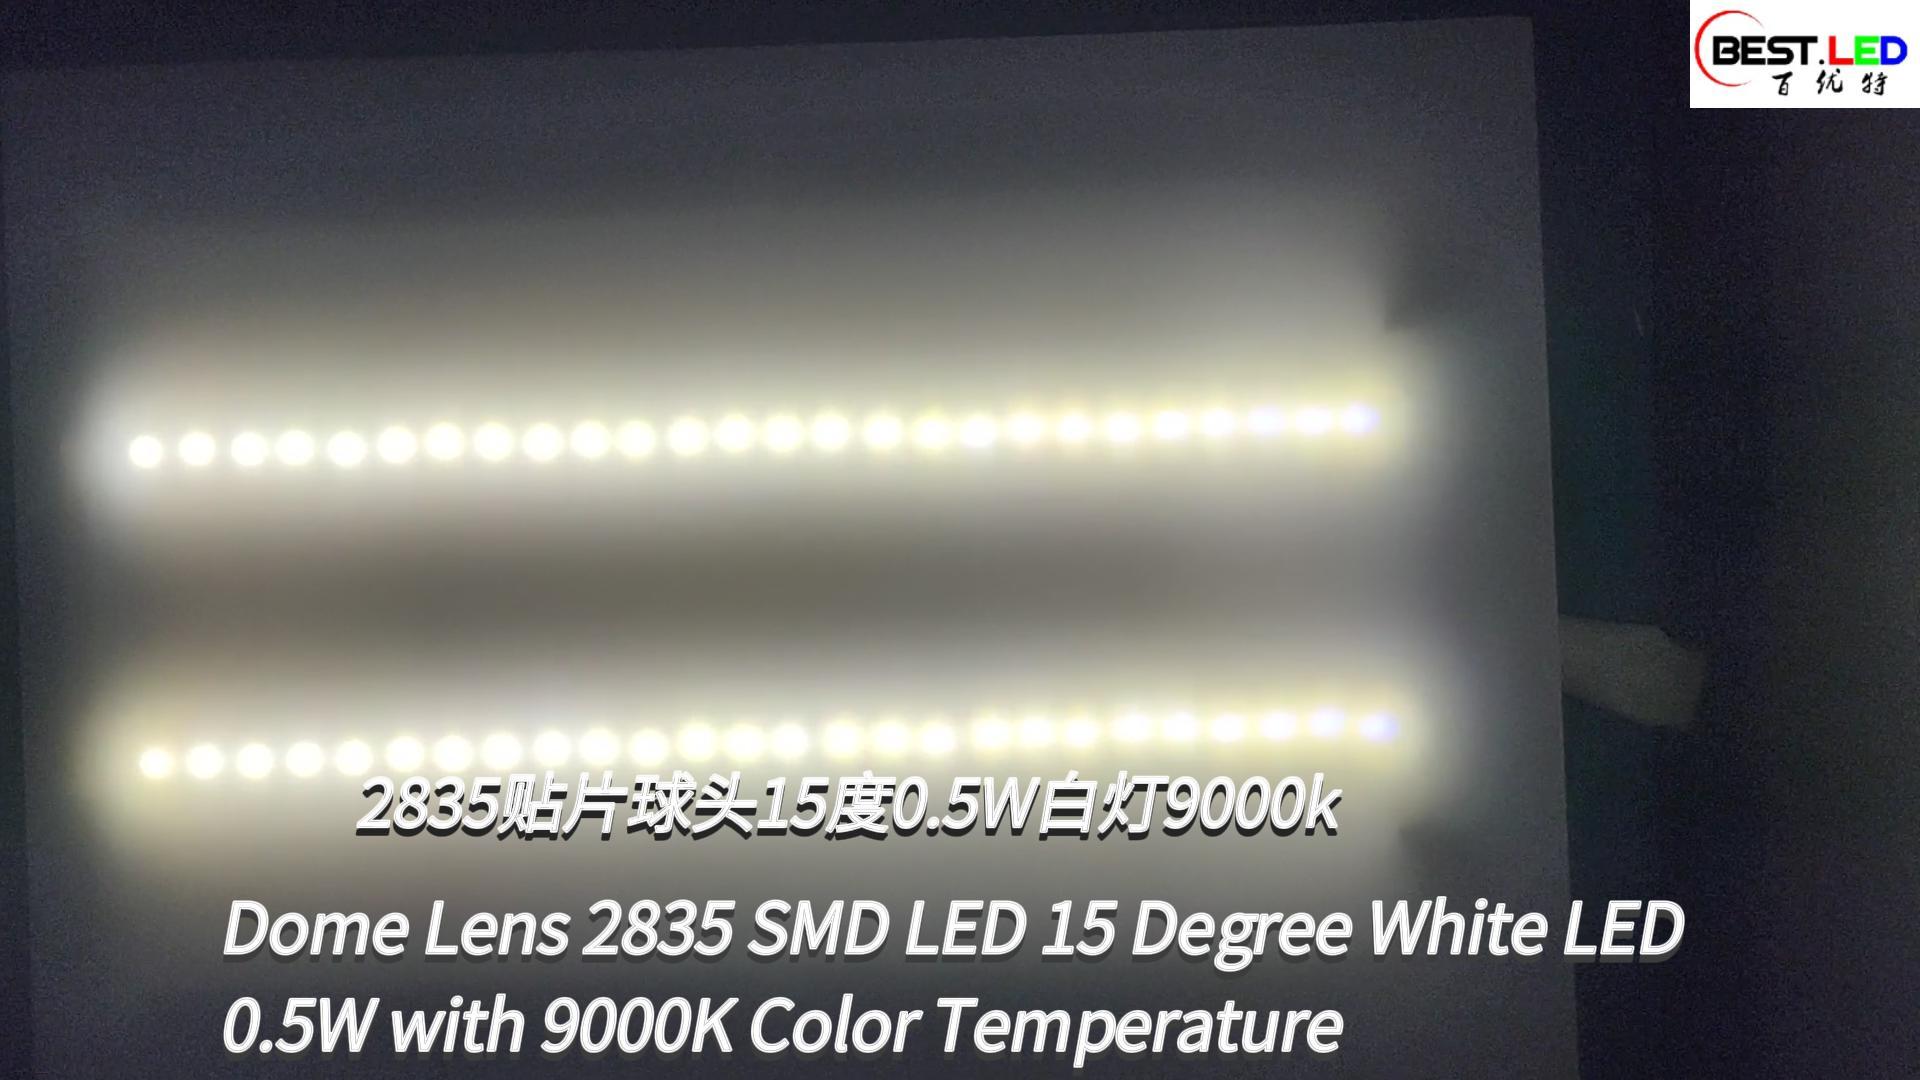 Domeobjektiv 2835 SMD LED 15 graders hvit LED